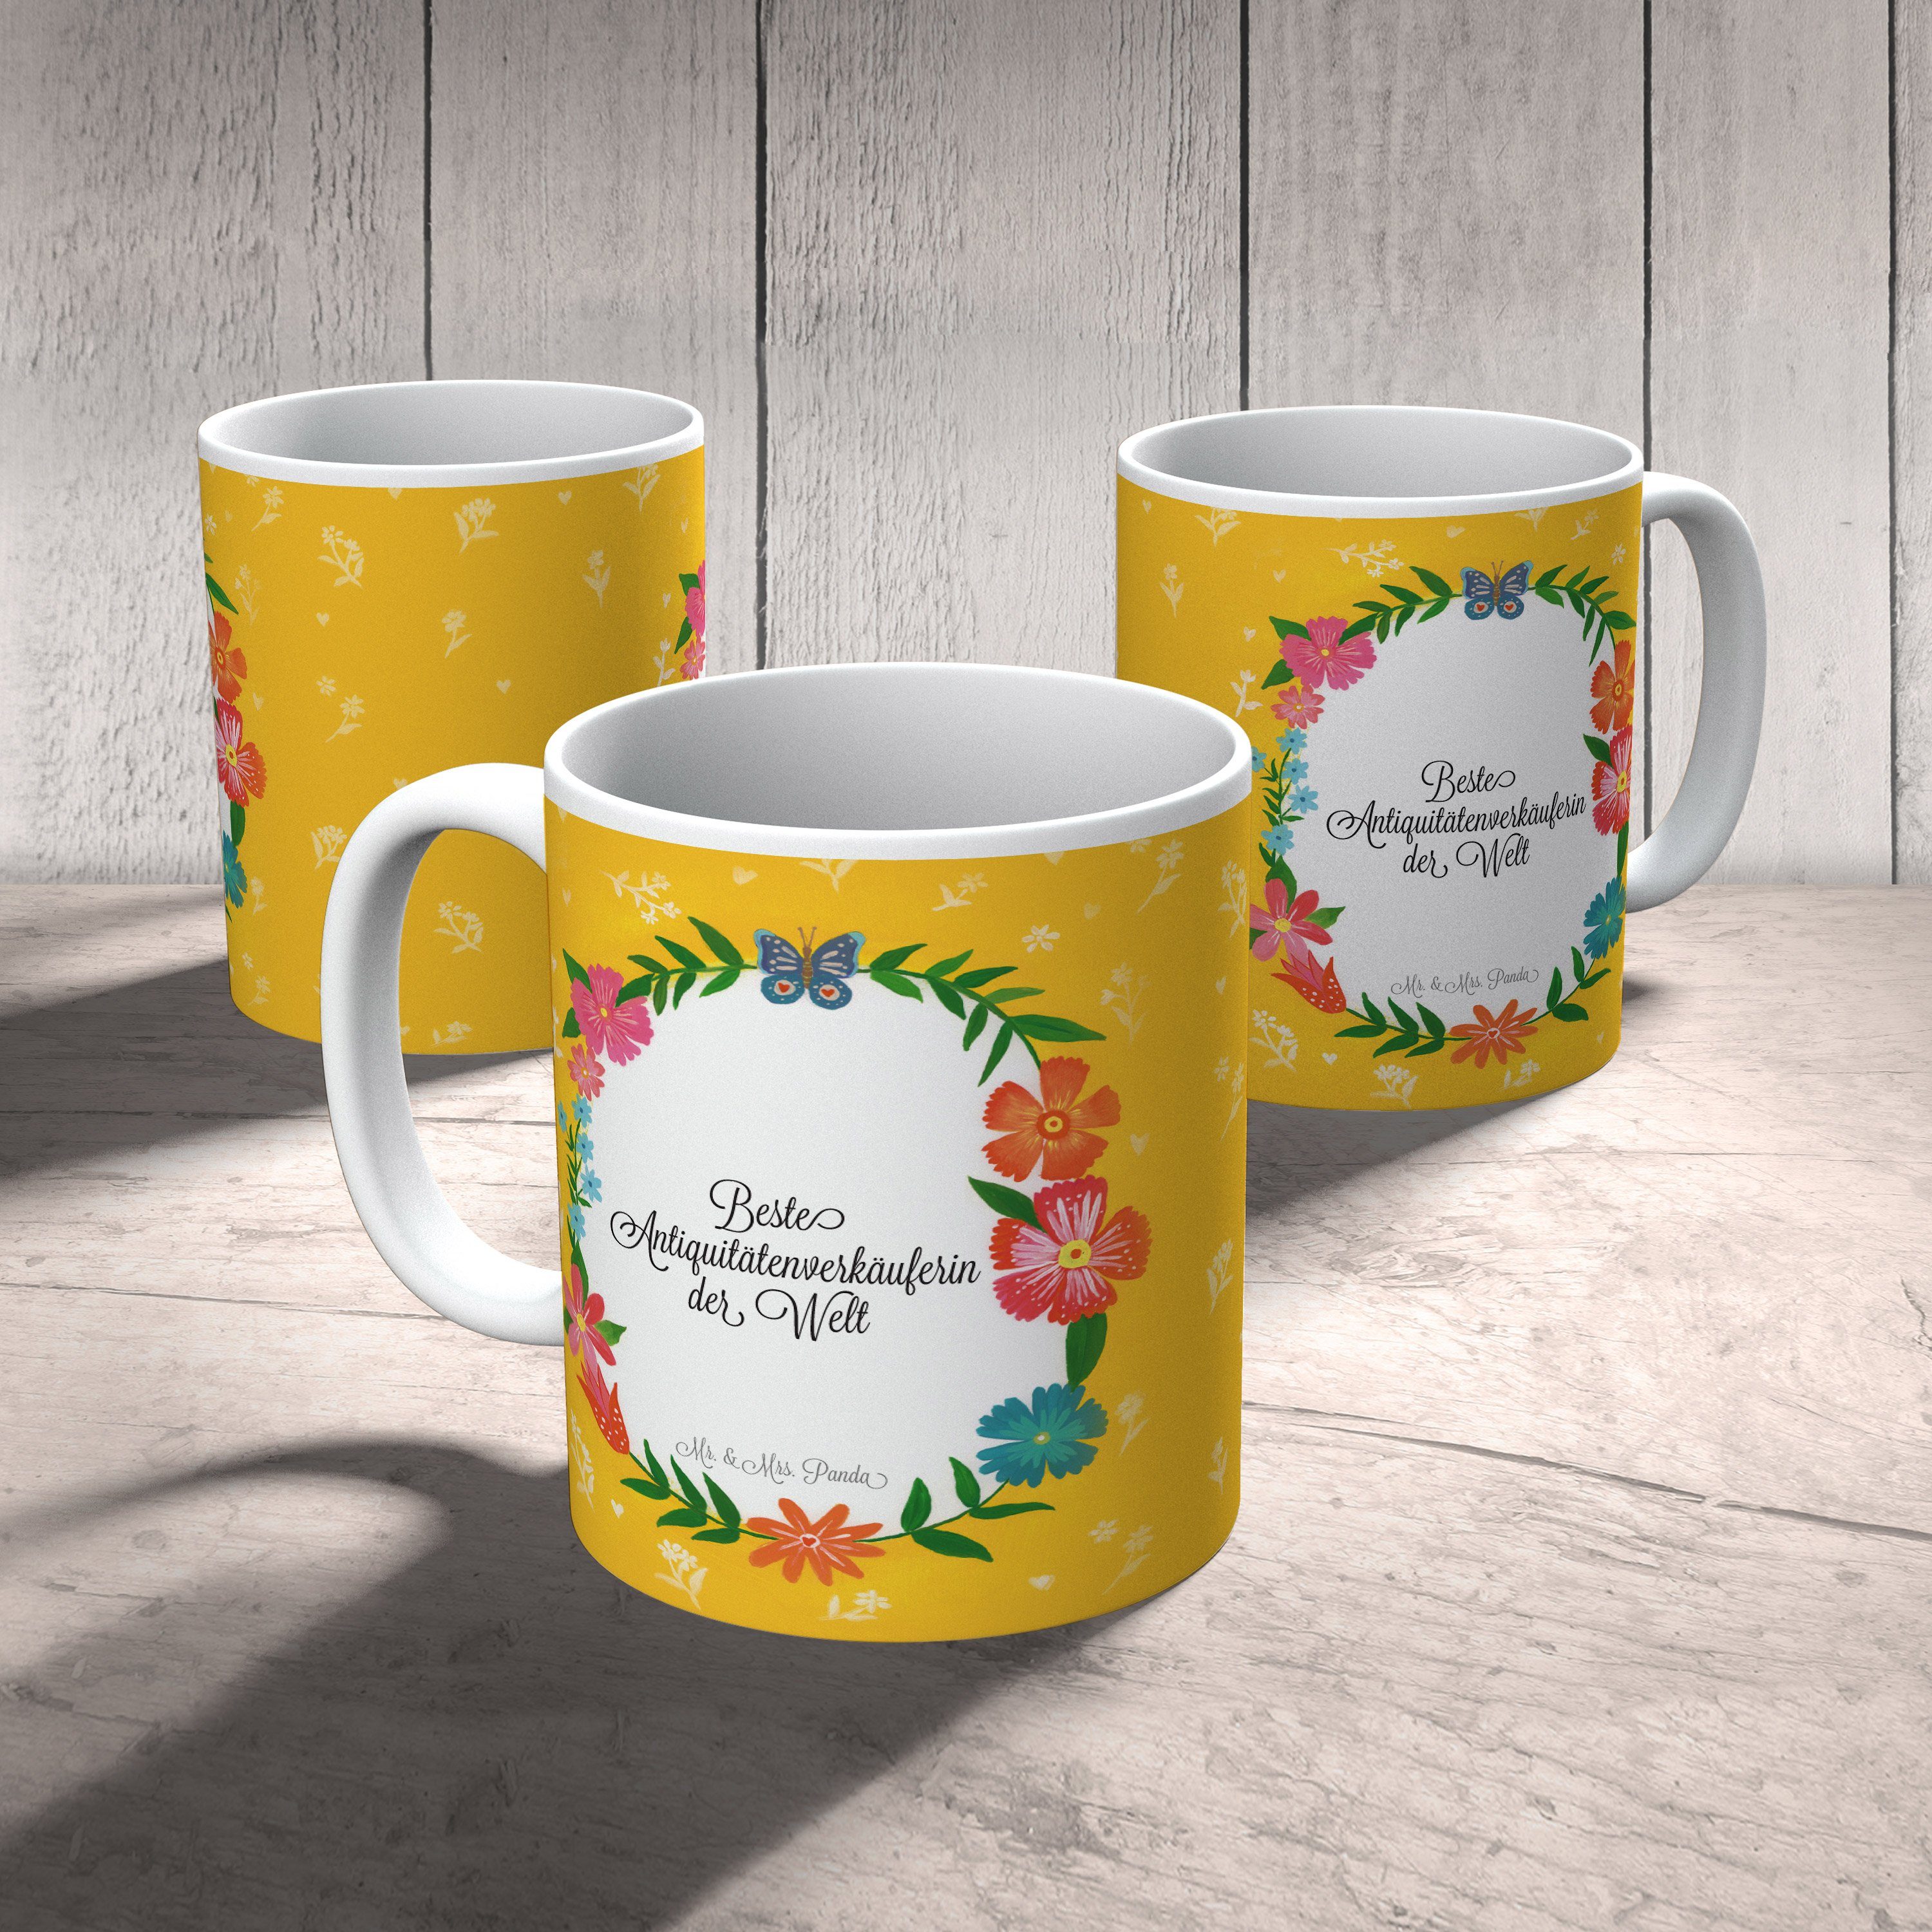 Mr. & Mrs. Panda Tasse - Geschenk, A, Antiquitätenverkäuferin Kaffeebecher, Keramik Berufsausbildung